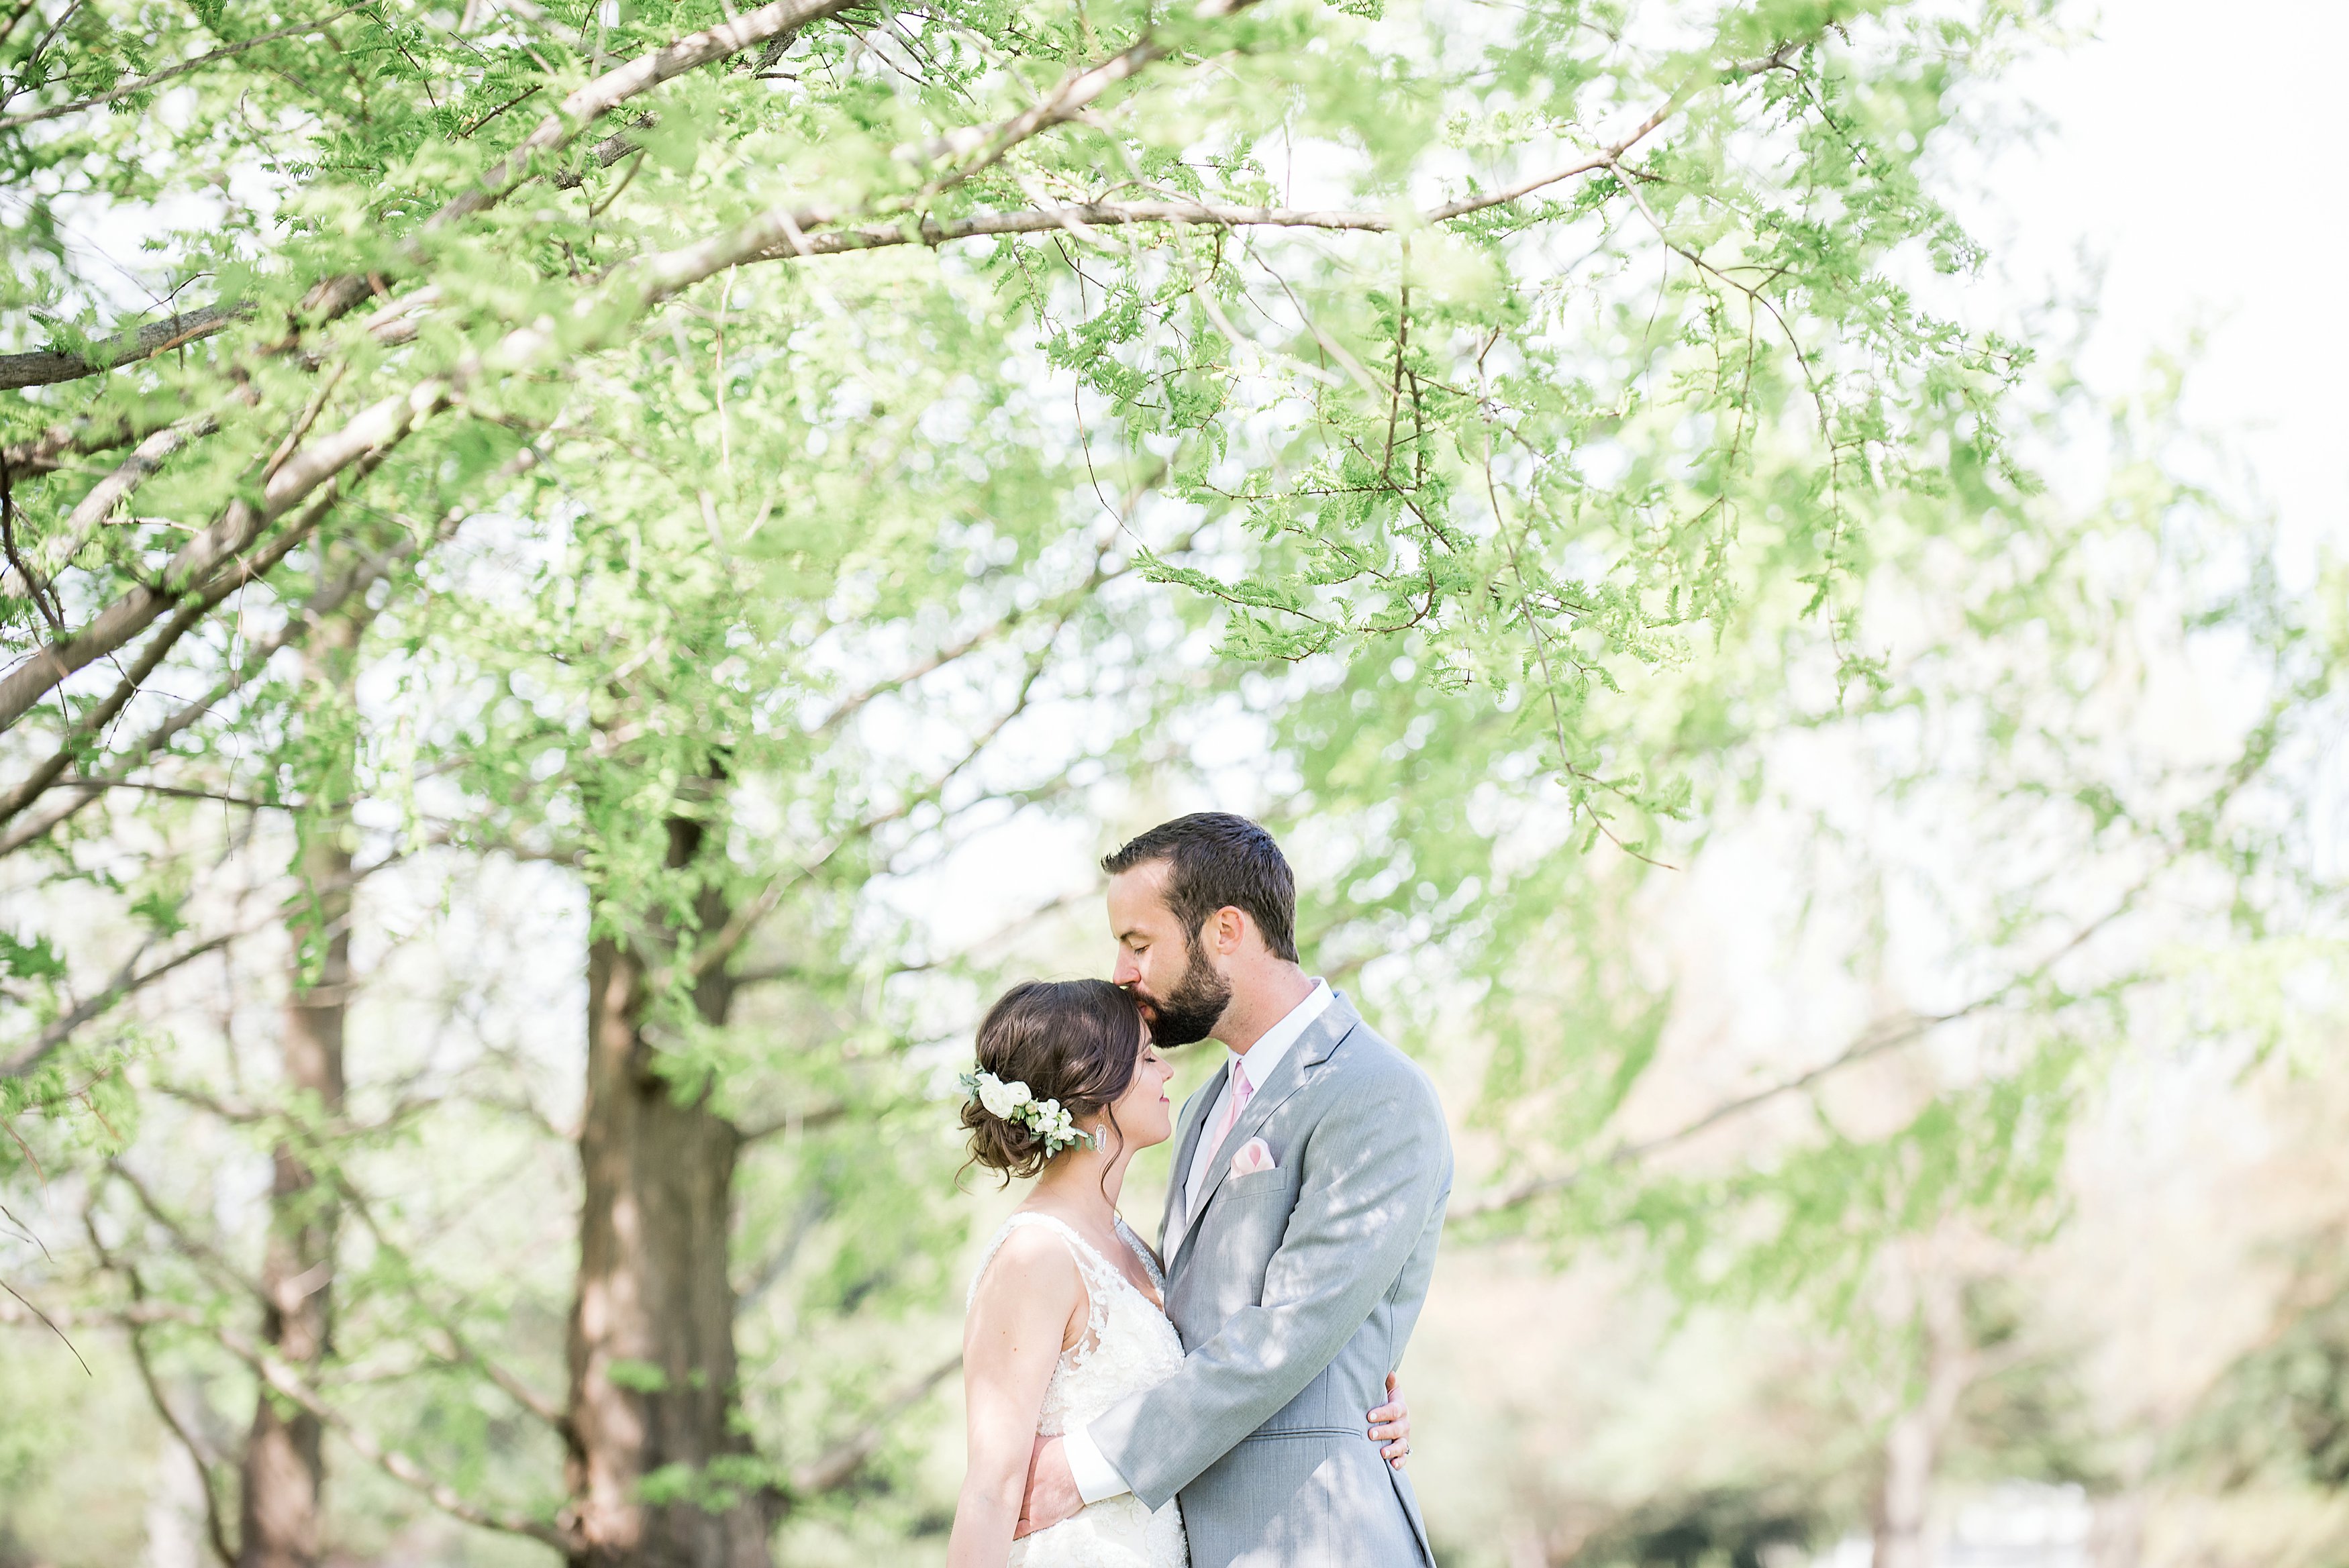 Sarah & Rachel | Wedding Photographers, Pale blue, blush, and white wedding | Hillcrest country club | Indianapolis, Indiana